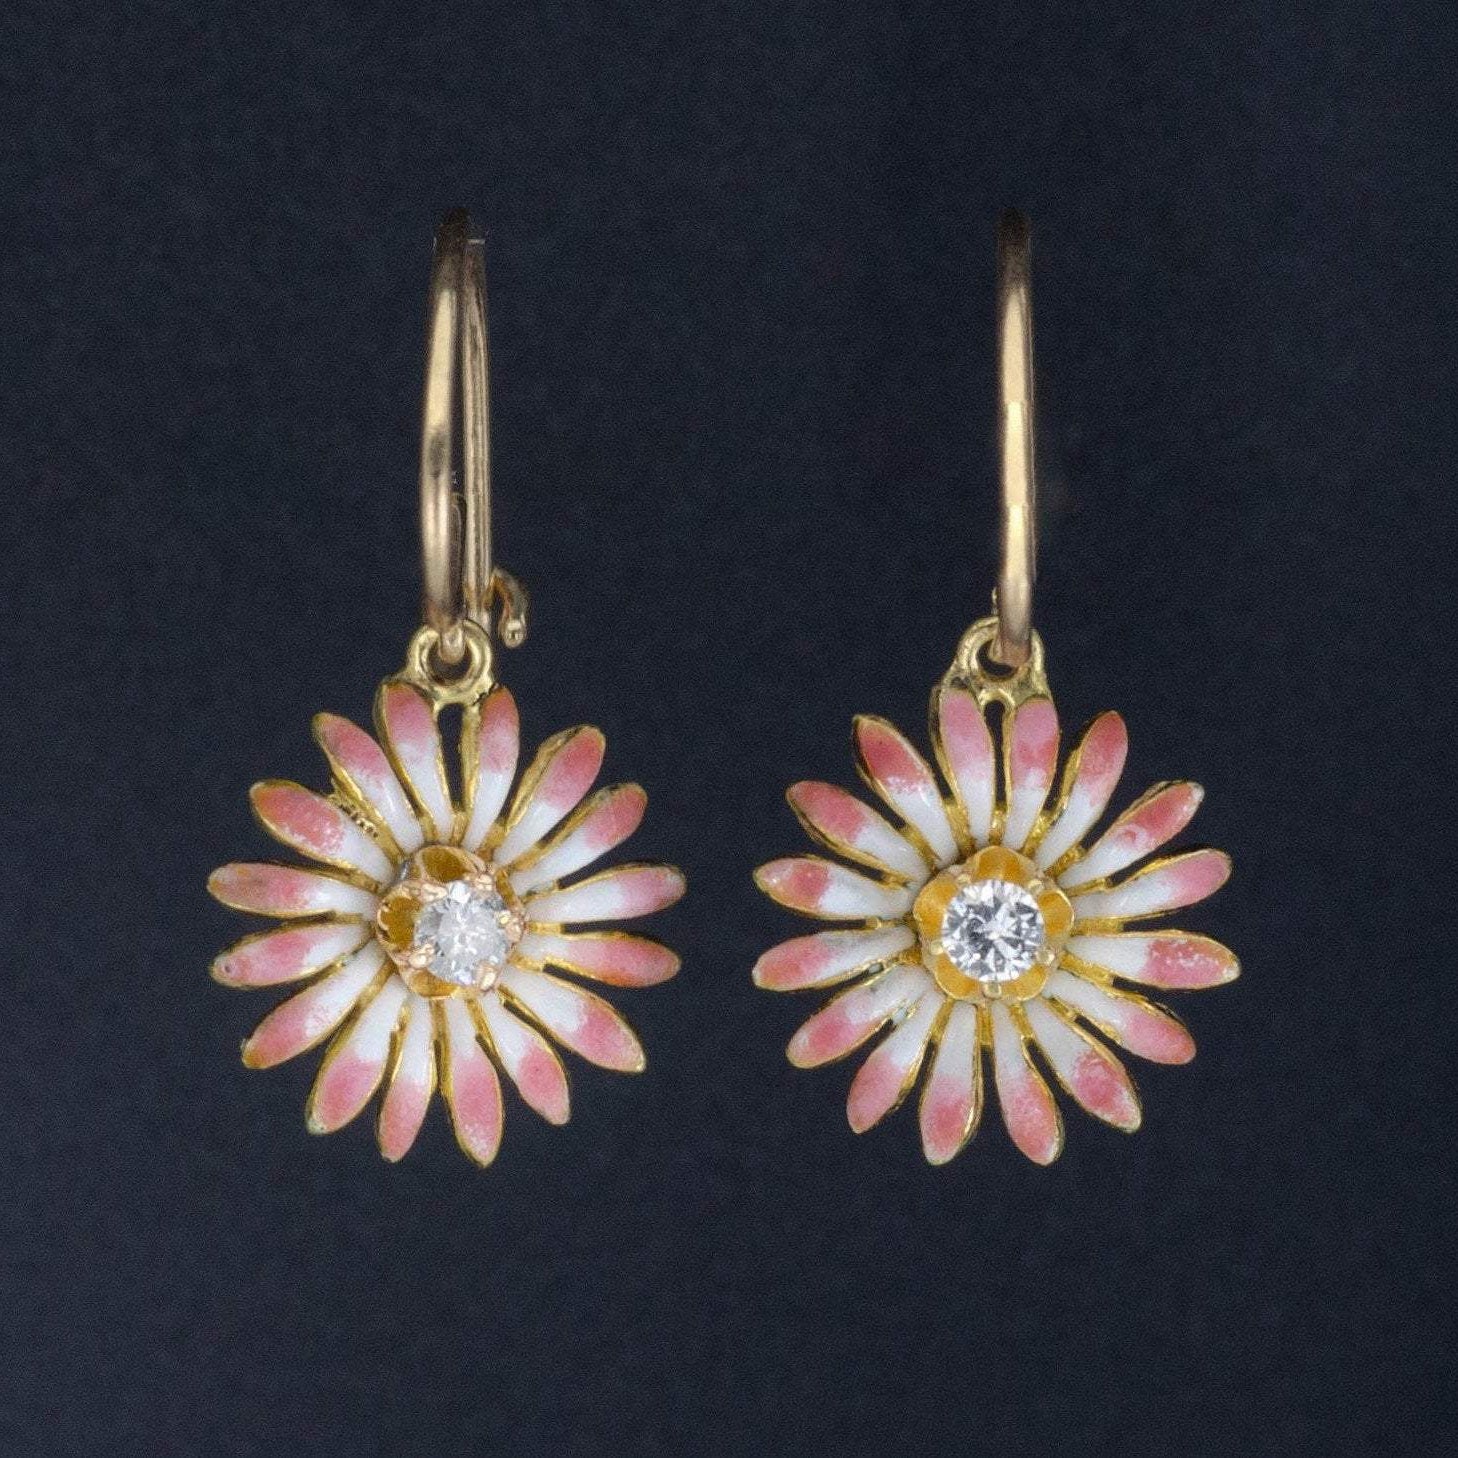 Antique Diamond Flower Earrings | 14k Gold & Pink Enamel Flower Earrings | Flower Earrings | 14k Gold Earrings